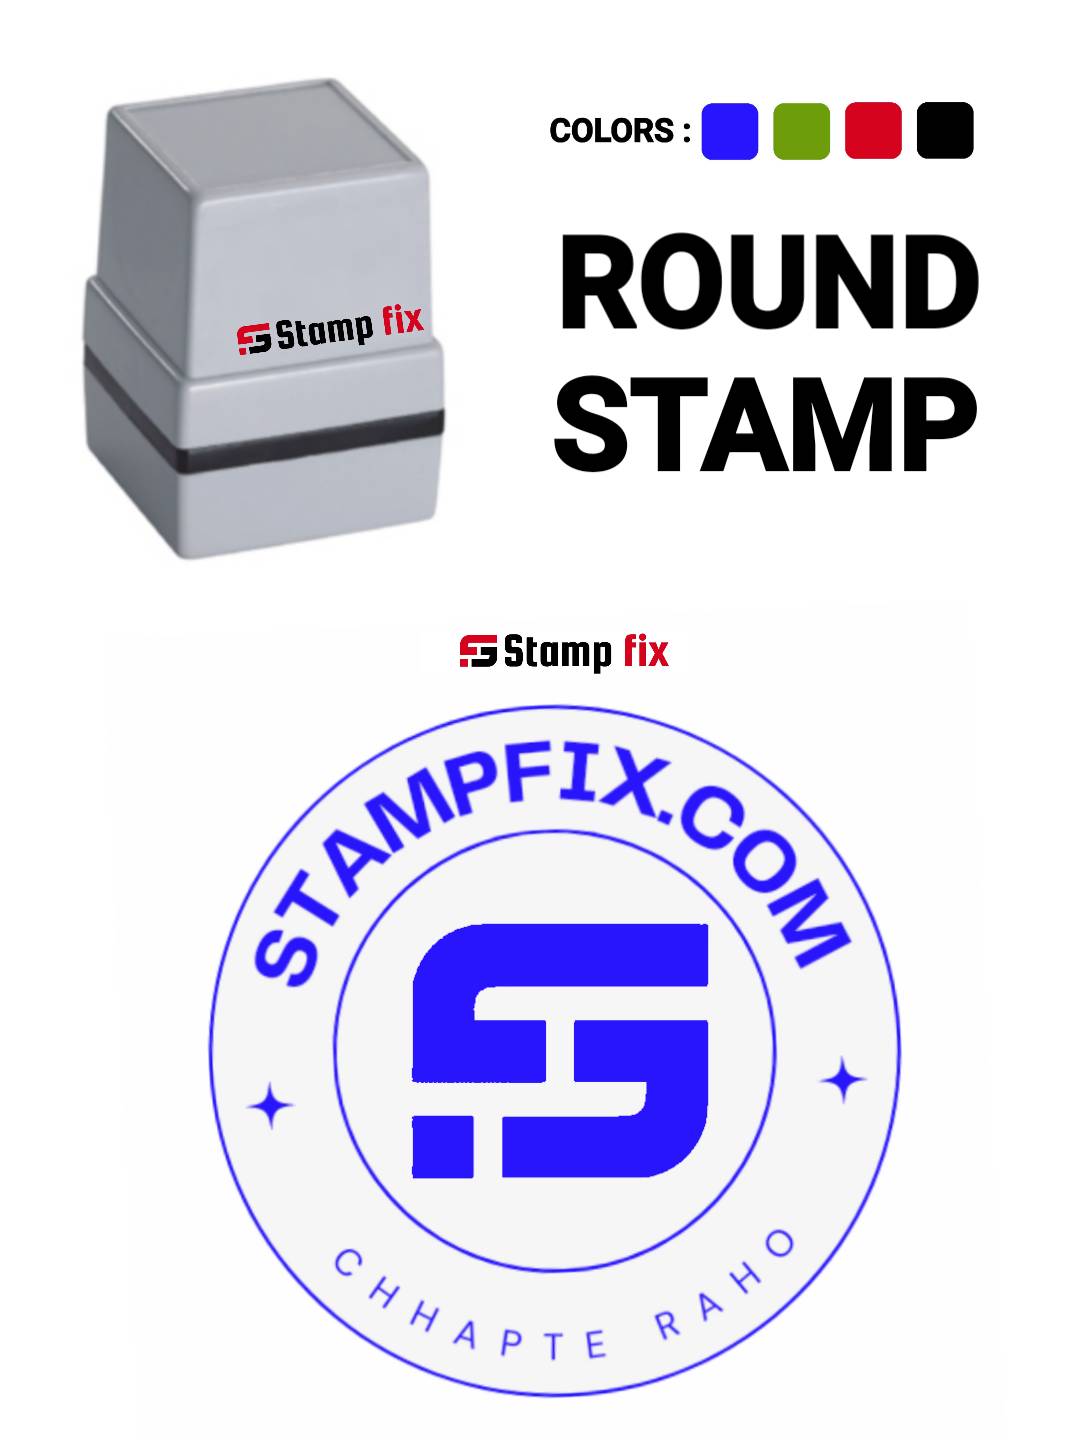 Round stamp, Self ink stamp, pre ink stamp, sun stamp, rubber stamp, nylon stamp, polymer stamp